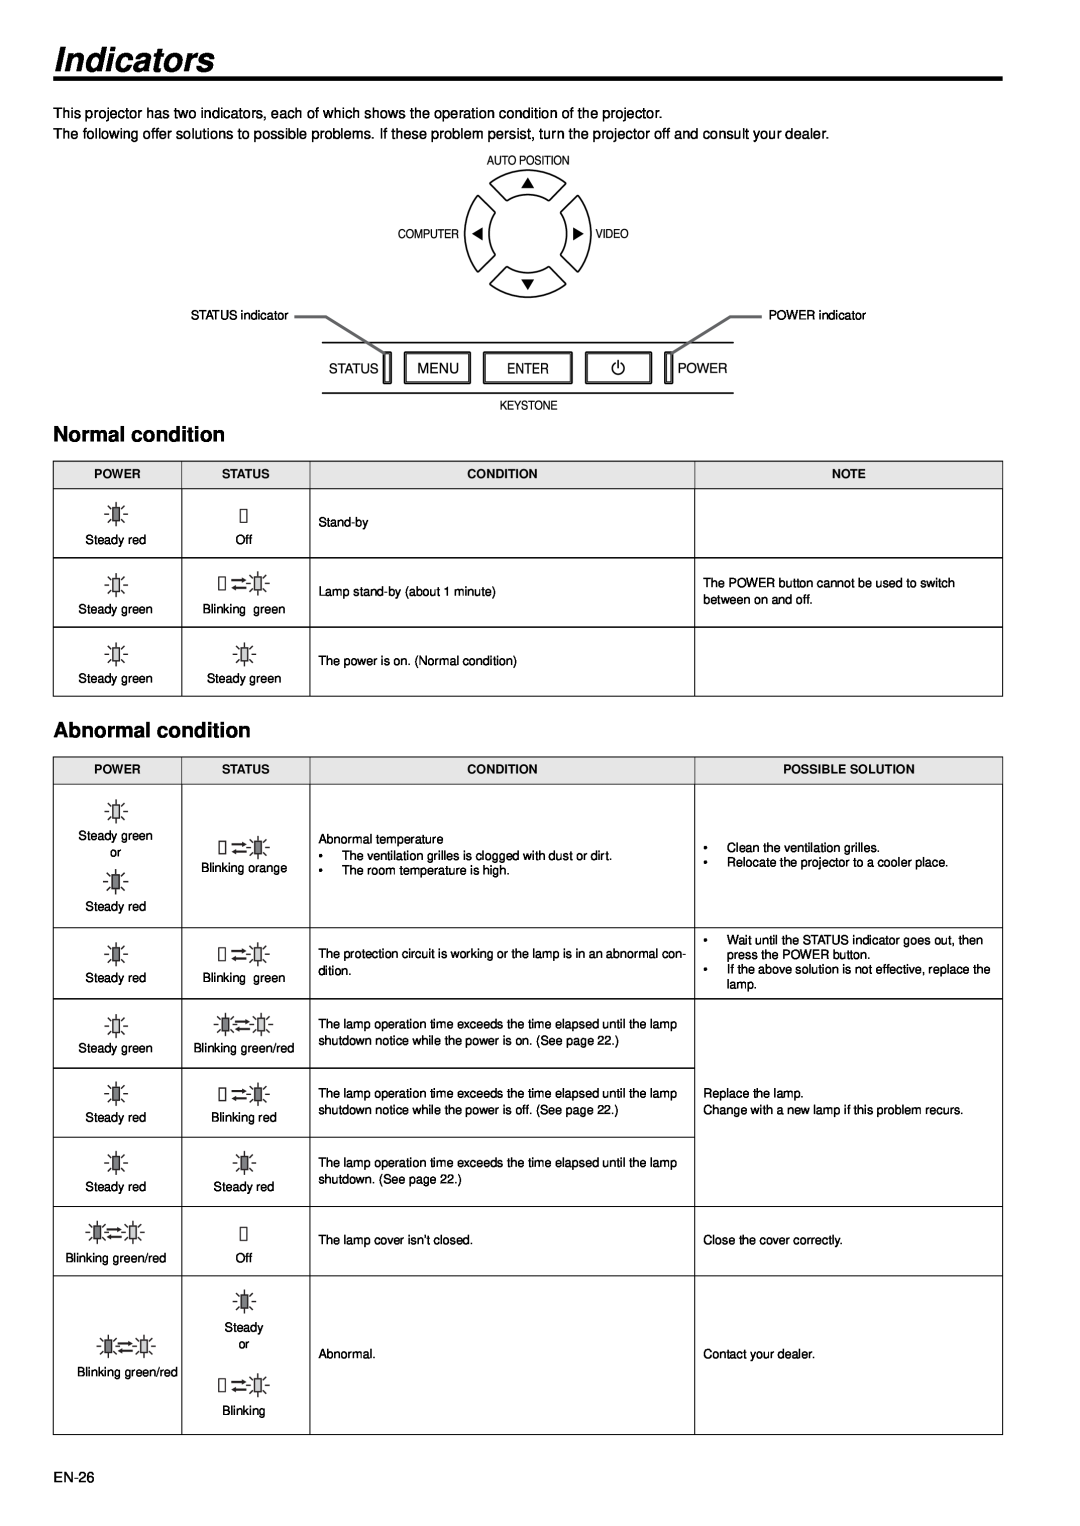 Mitsubishi Electronics XD470U-G user manual Indicators, Normal condition, Abnormal condition 